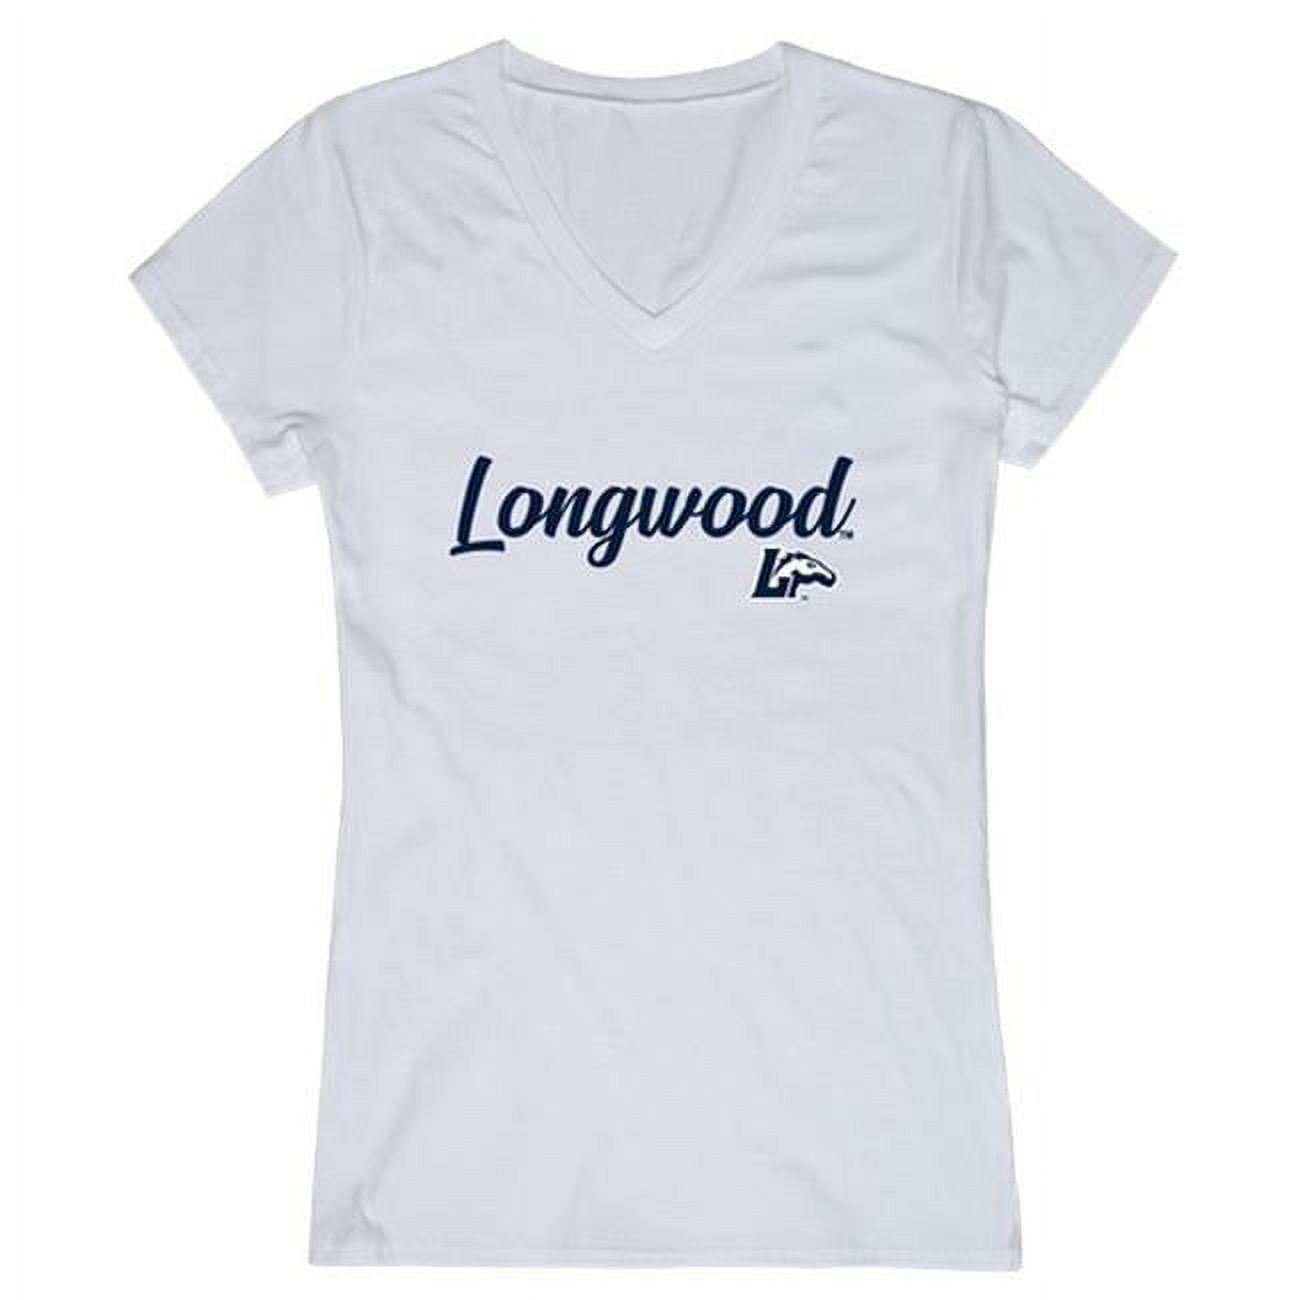 555-330-HGY-04 - T-Shirt Grey for Women, Extra Script Longwood Republic W Heather Large University